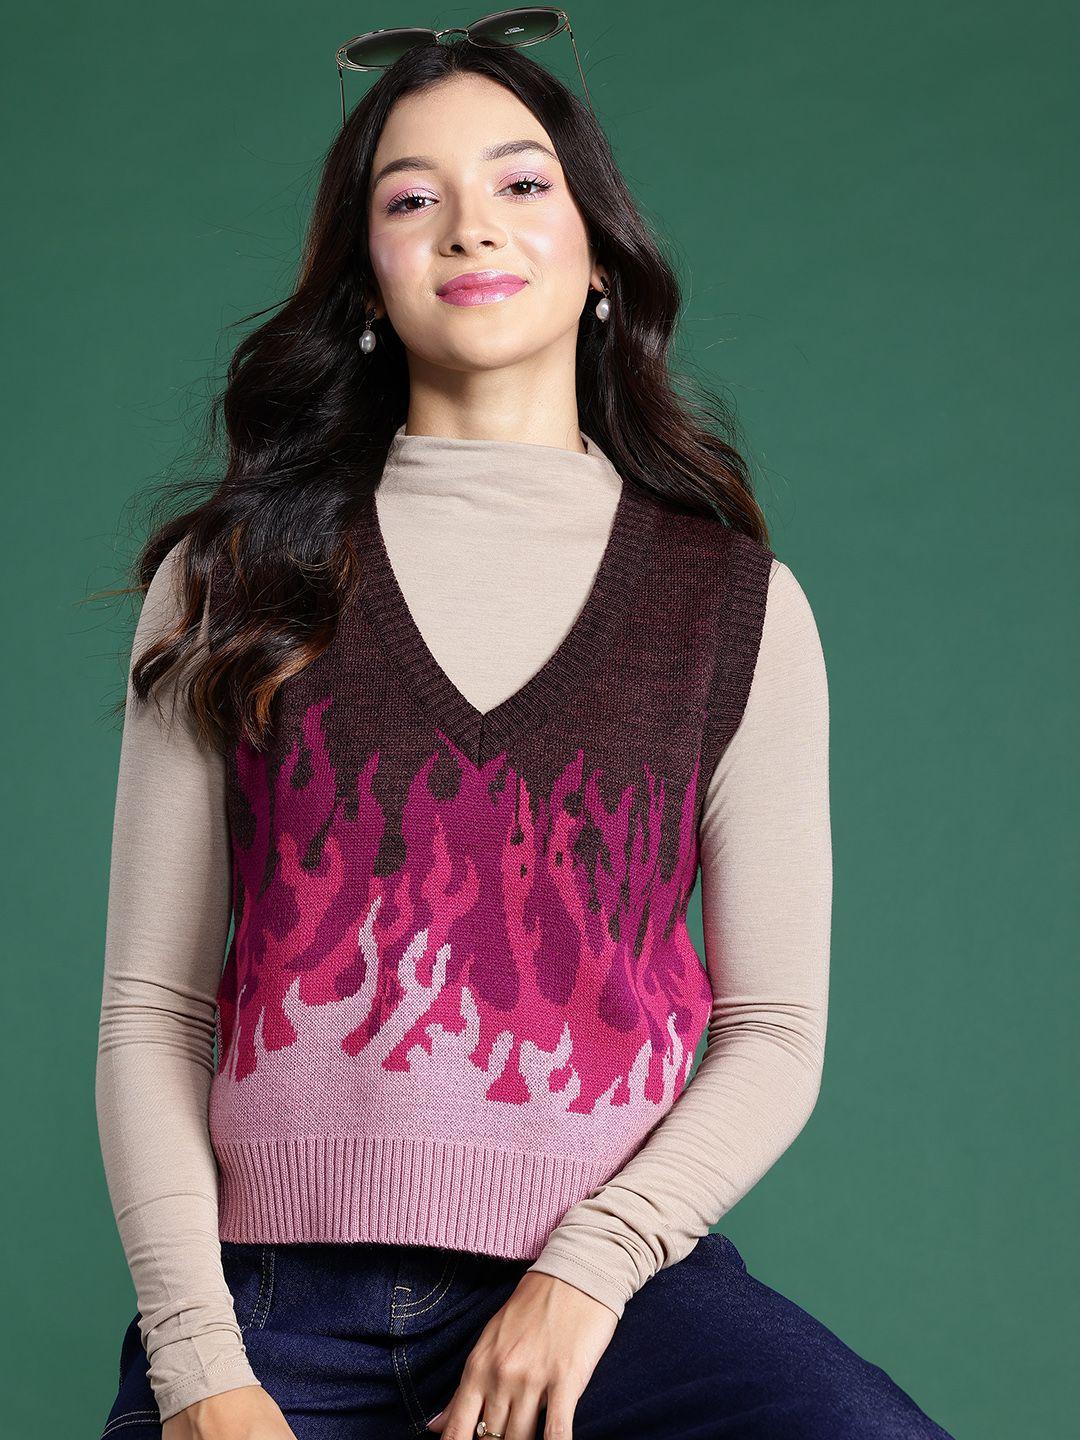 dressberry woven design acrylic sweater vest